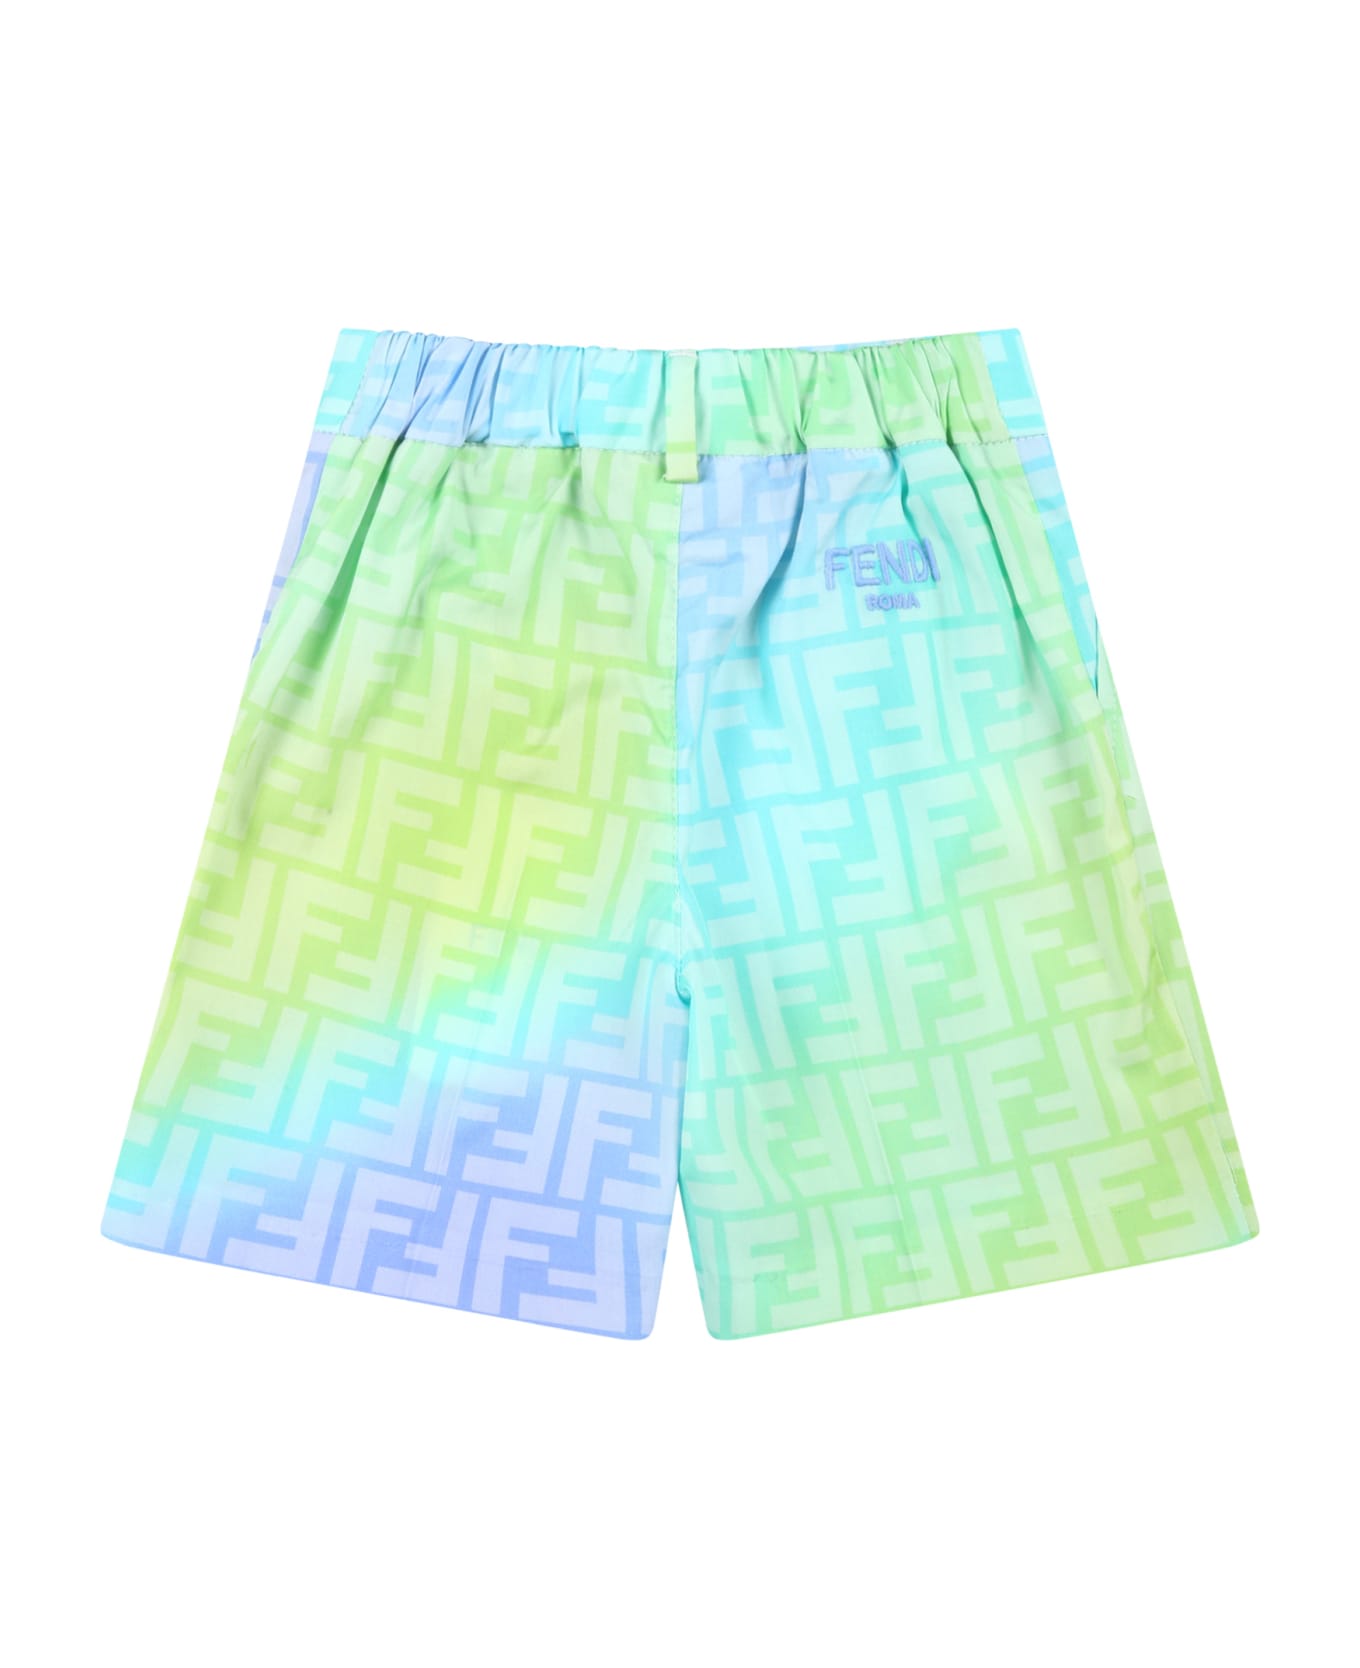 Fendi Multicolor Shorts For Baby Boy With Ff - Multicolor